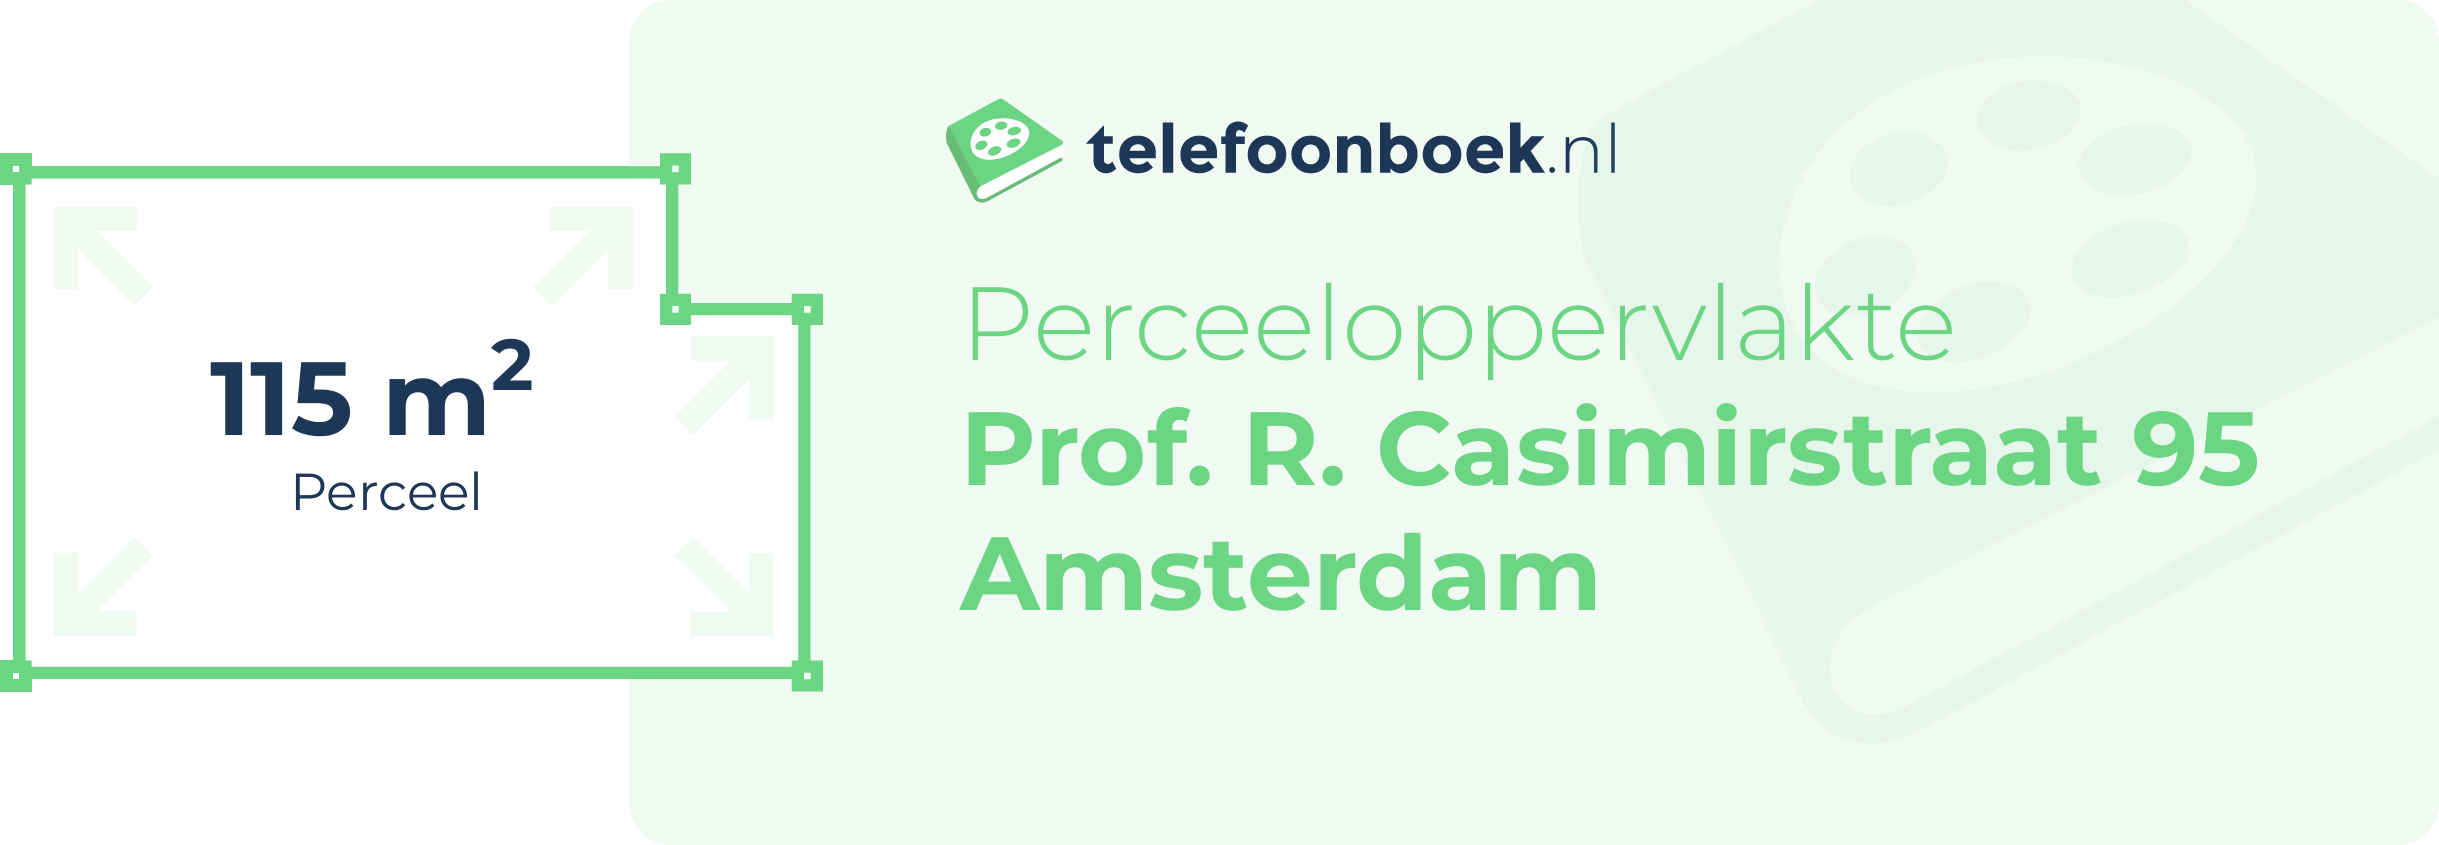 Perceeloppervlakte Prof. R. Casimirstraat 95 Amsterdam